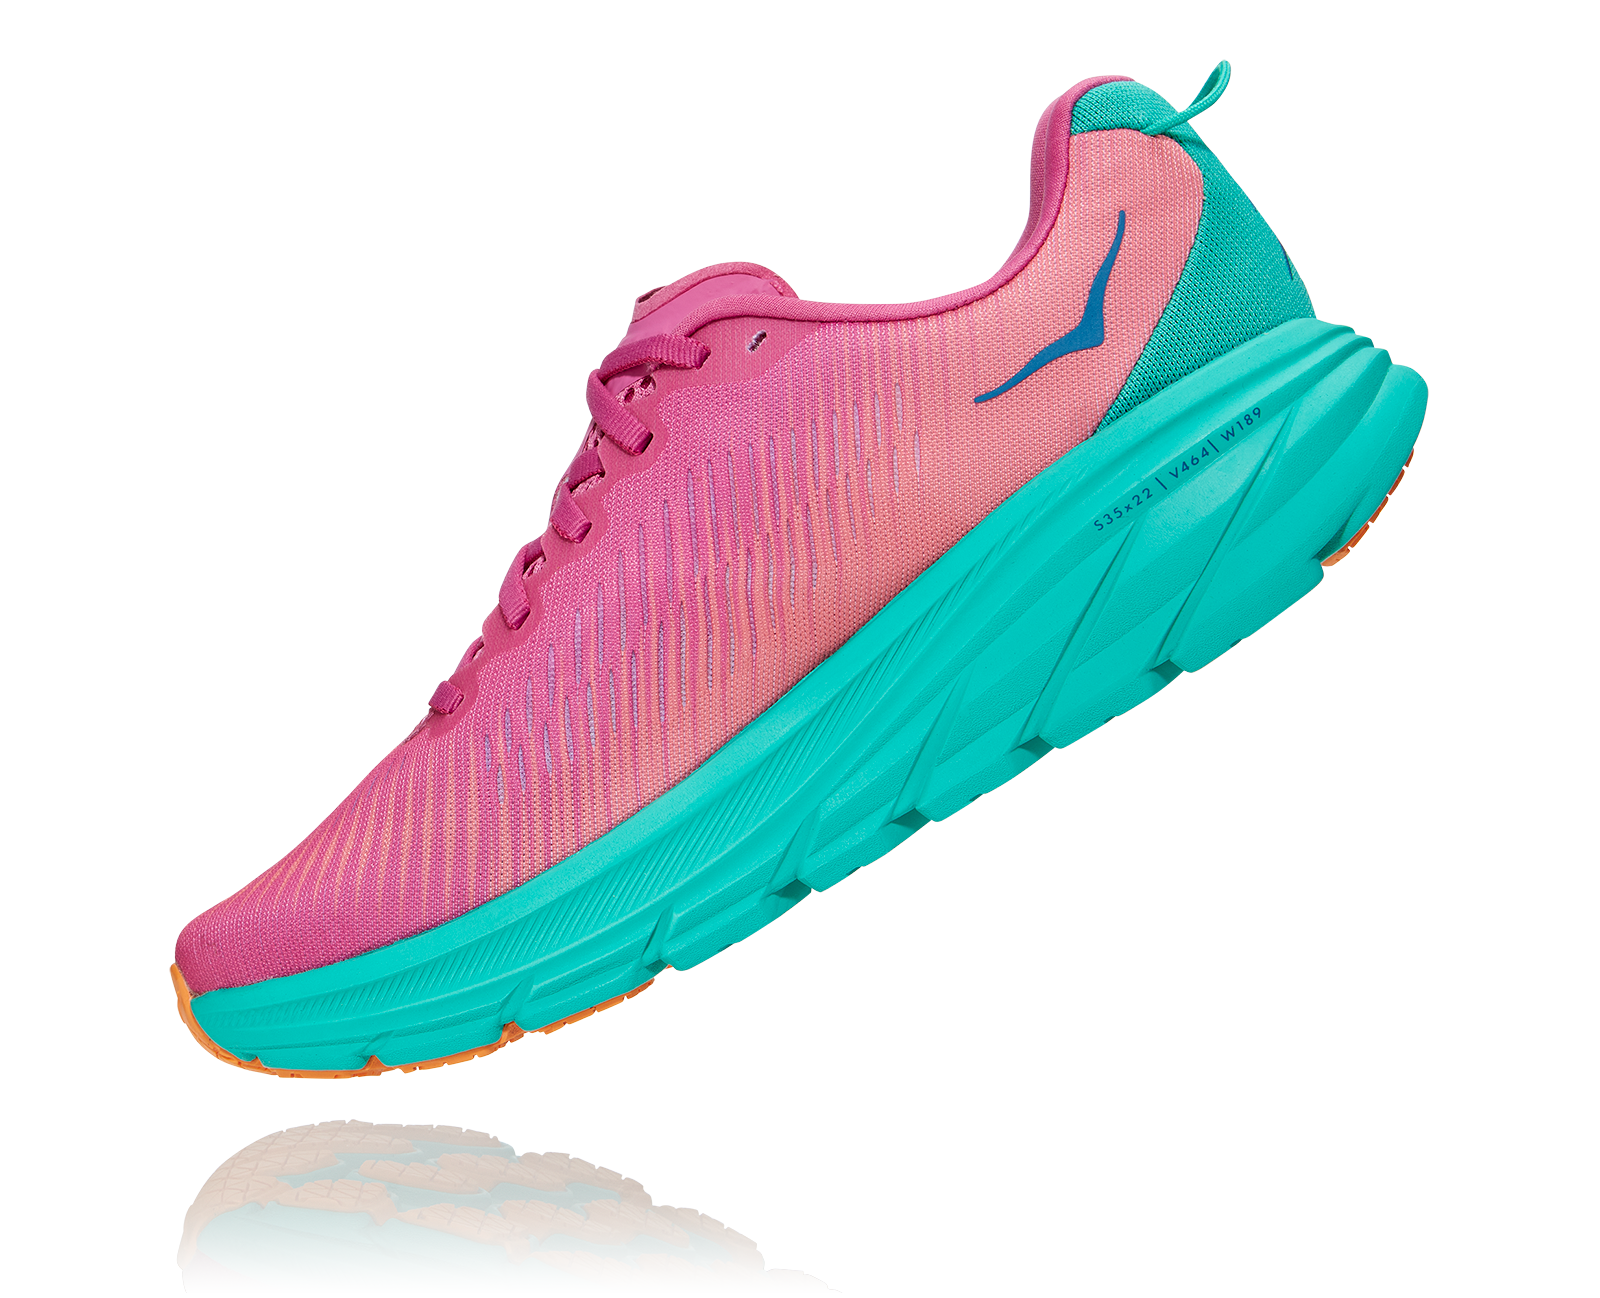 Hoka Womens Rincon 3 road running shoe, pink and blue colour, light weight for racing shoe, maximum cushioning, neutral shoe